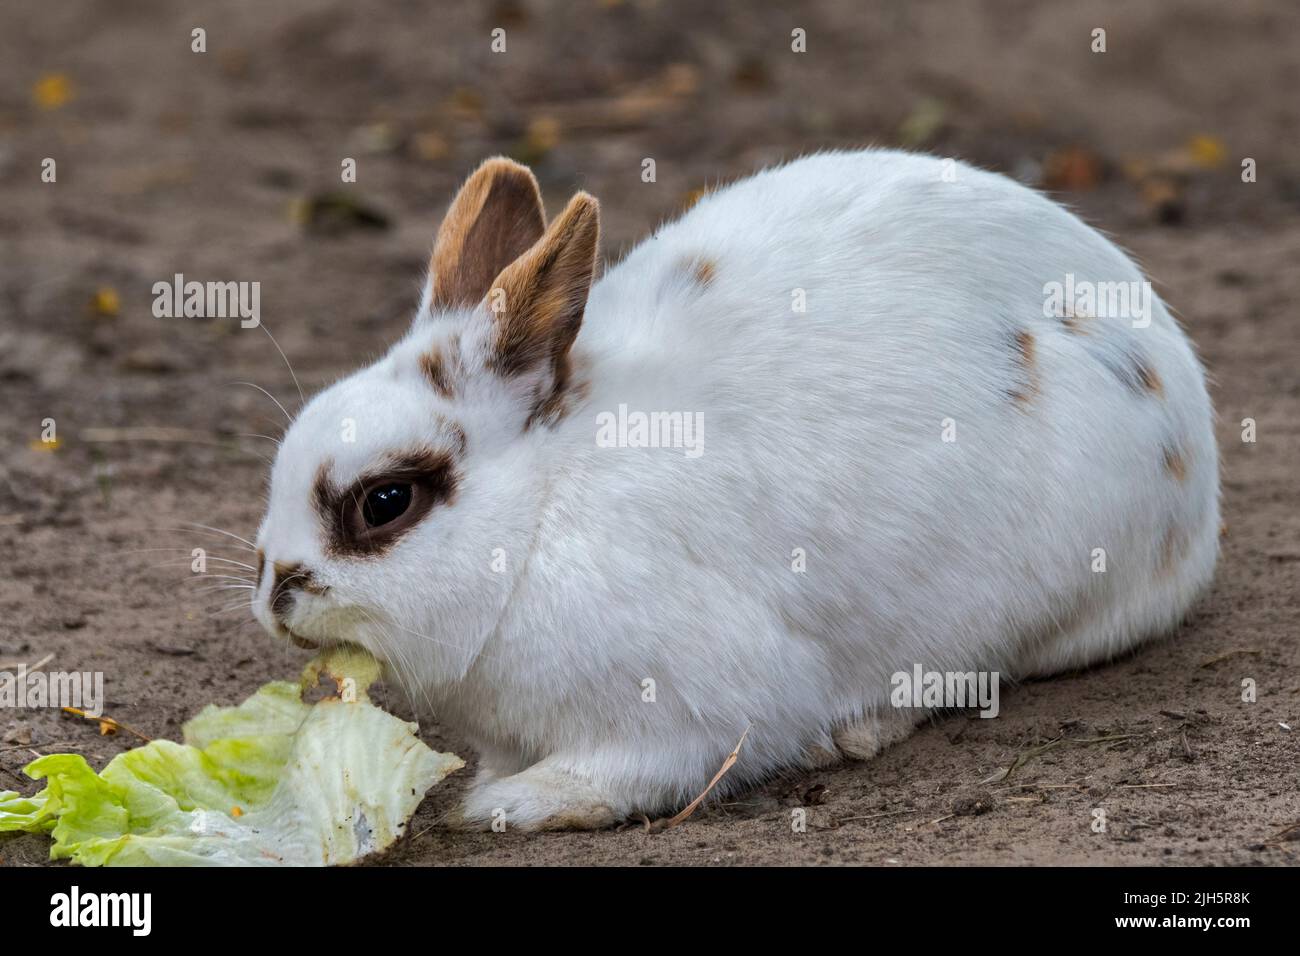 Primer plano de conejo enano blanco doméstico / conejo mascota (Oryctolagus cuniculus domesticus) comiendo hoja de lechuga Foto de stock